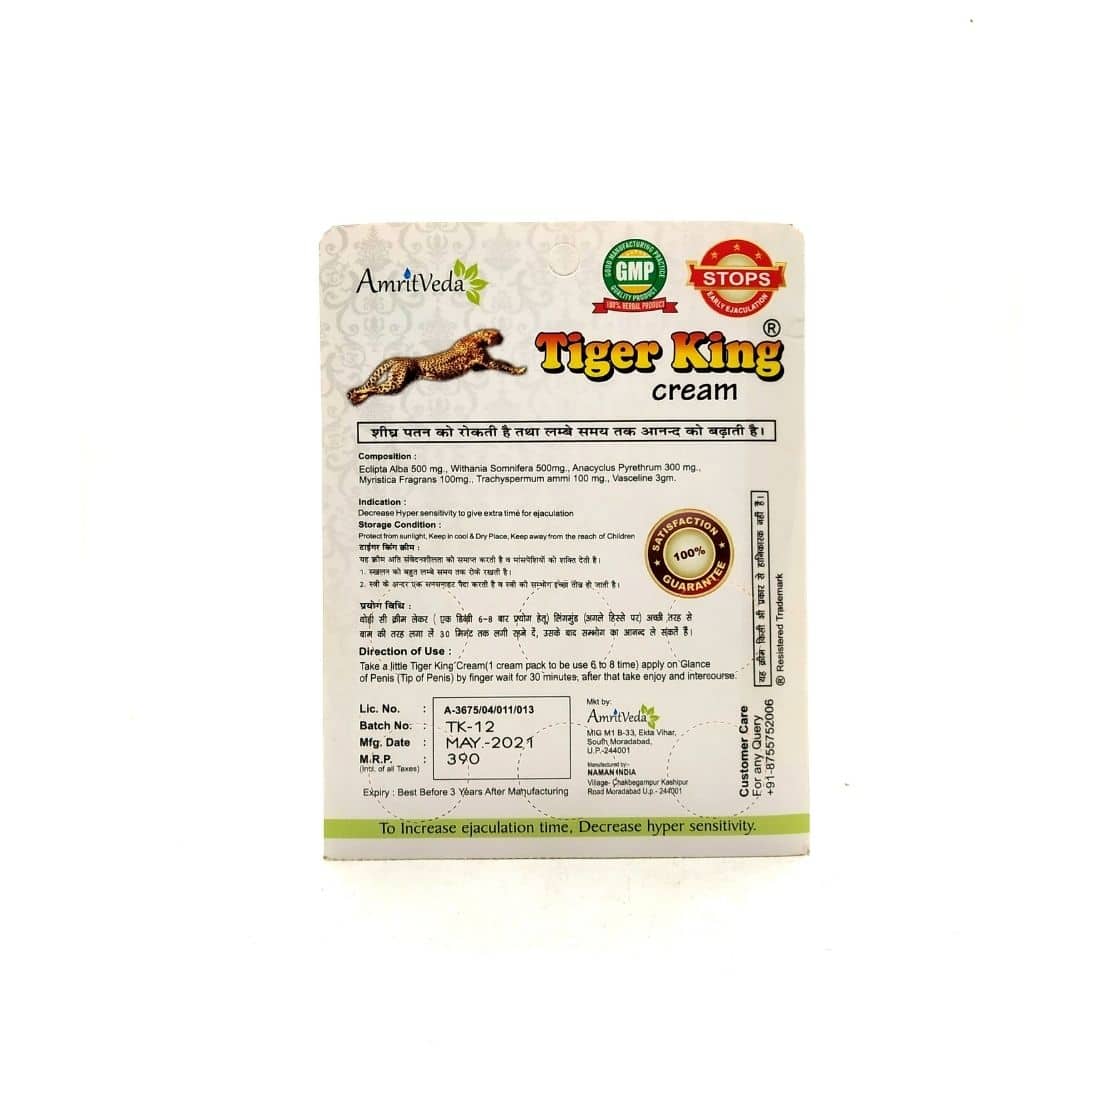 Tiger King Cream (Pack Of 2) - GITATiger King Cream (Pack Of 2)admin-4835GITATIG-A-84-9-17567419870733537Tiger King Cream